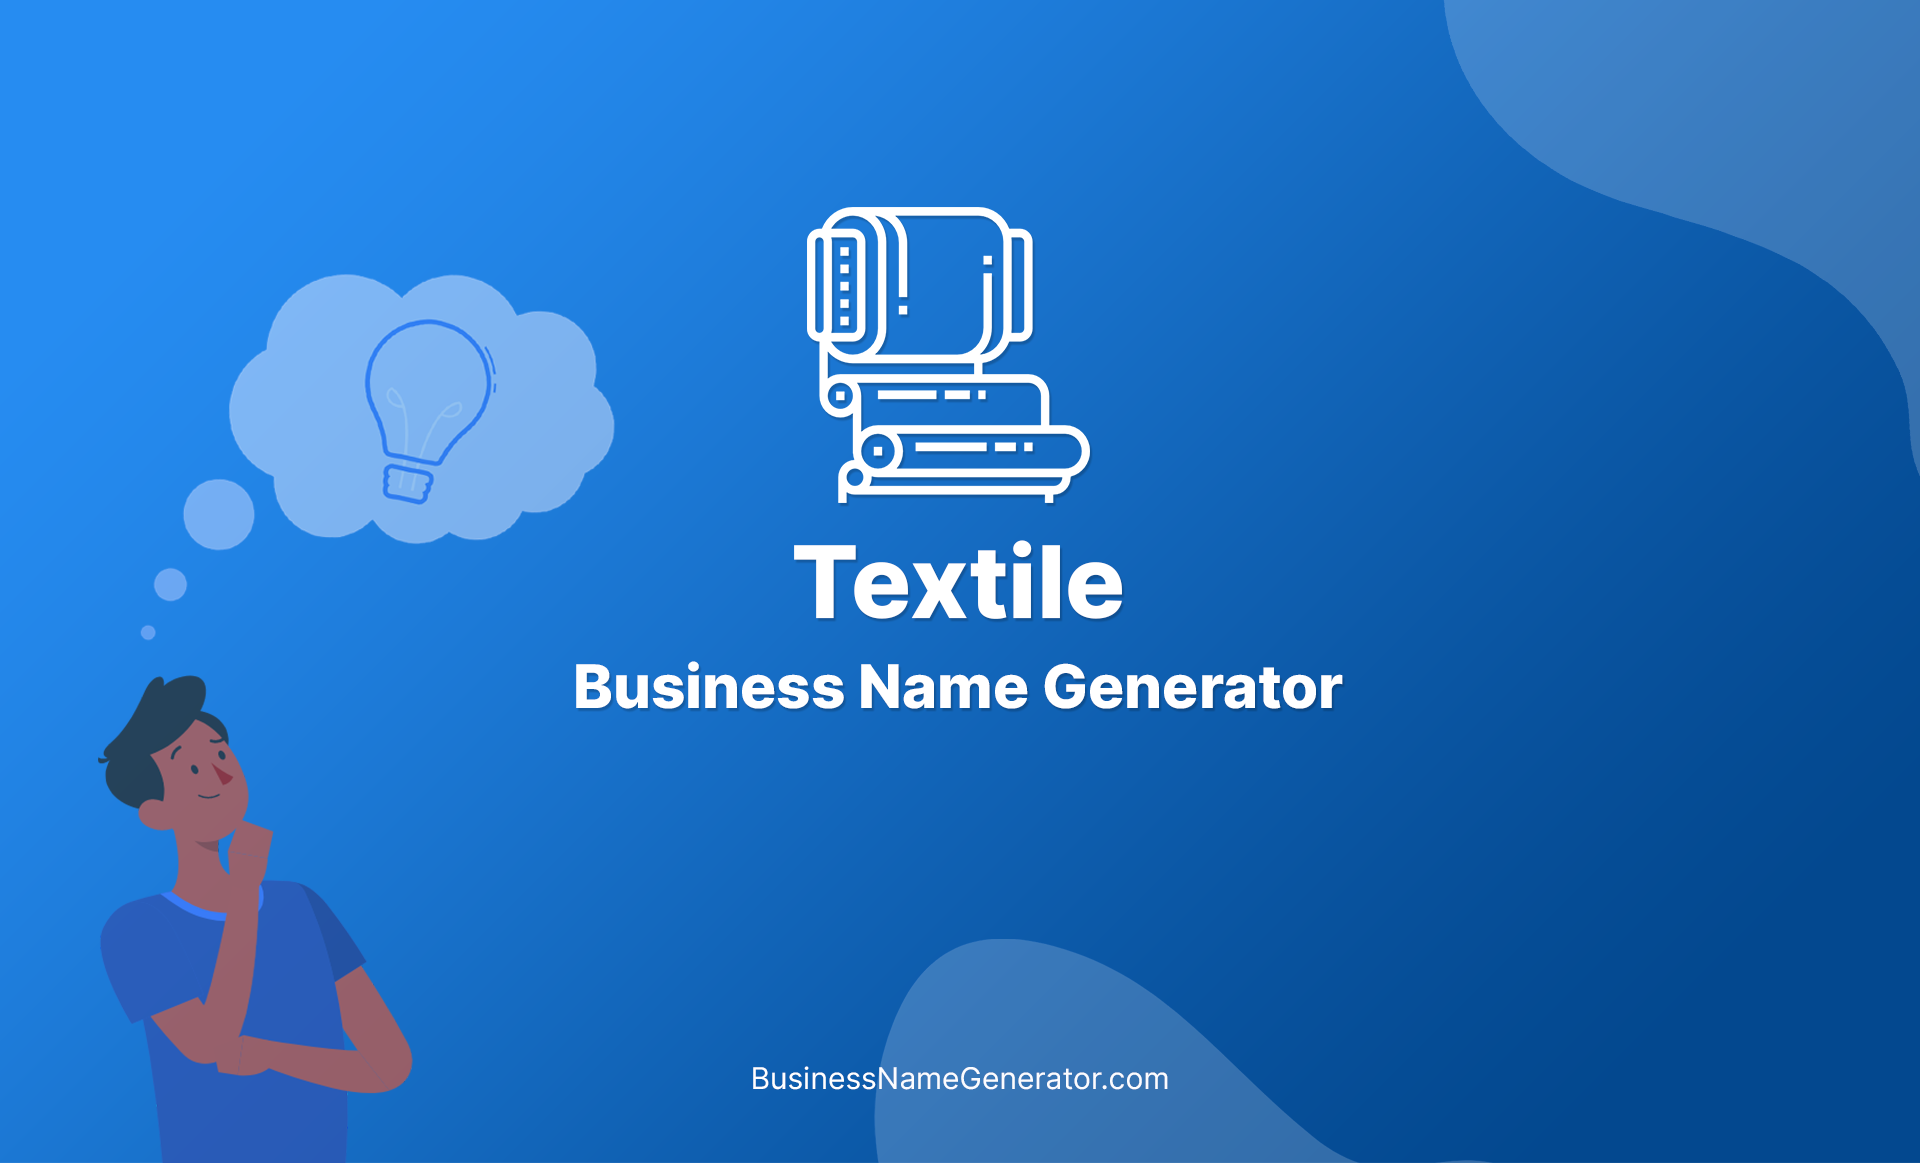 Textile Business Name Generator